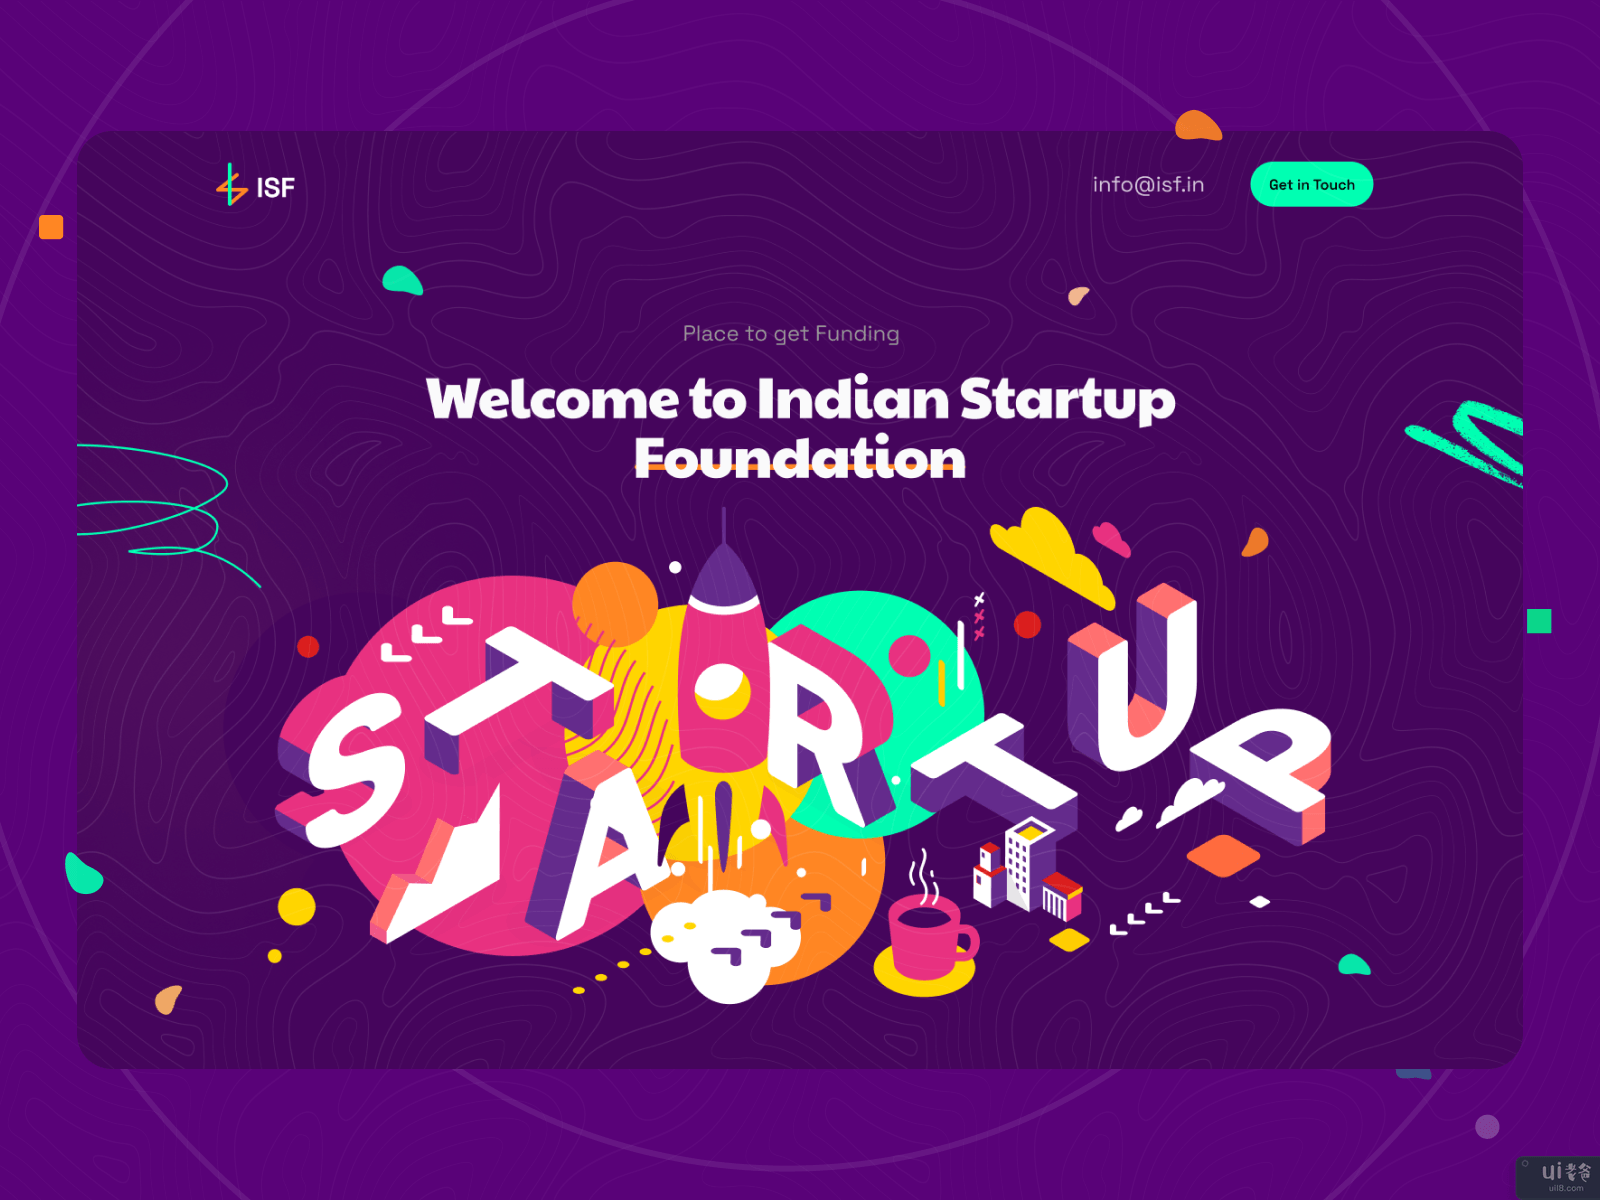 印度初创企业基金会 着陆页设计(Indian Startup Foundation Landing page design)插图